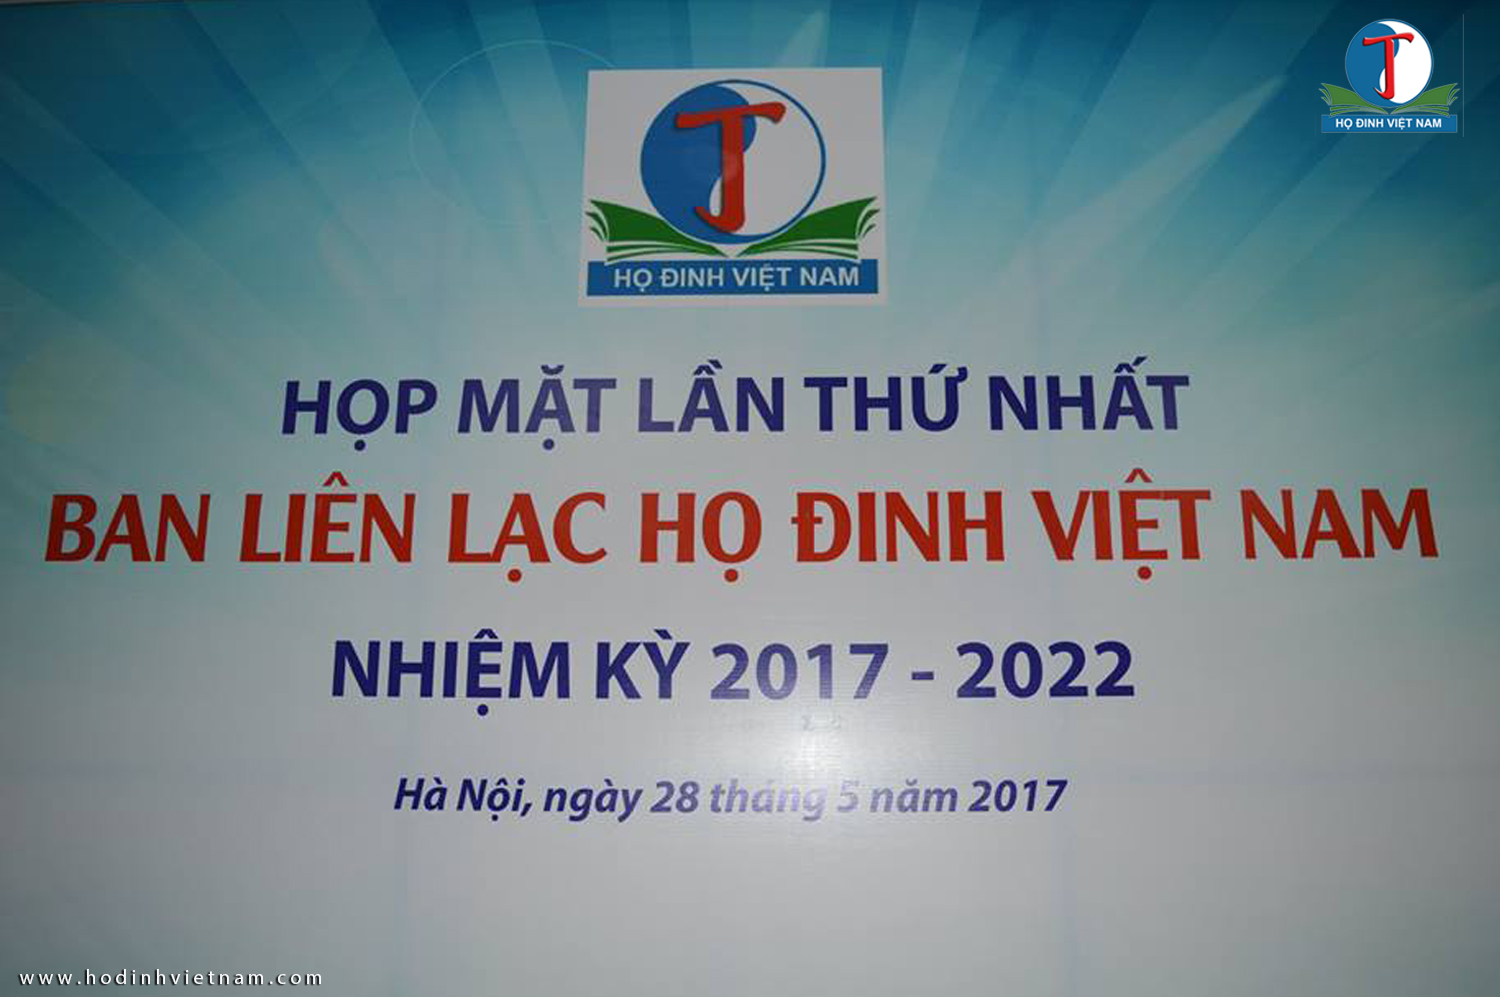 Ho Dinh Viet Nam 001.jpg